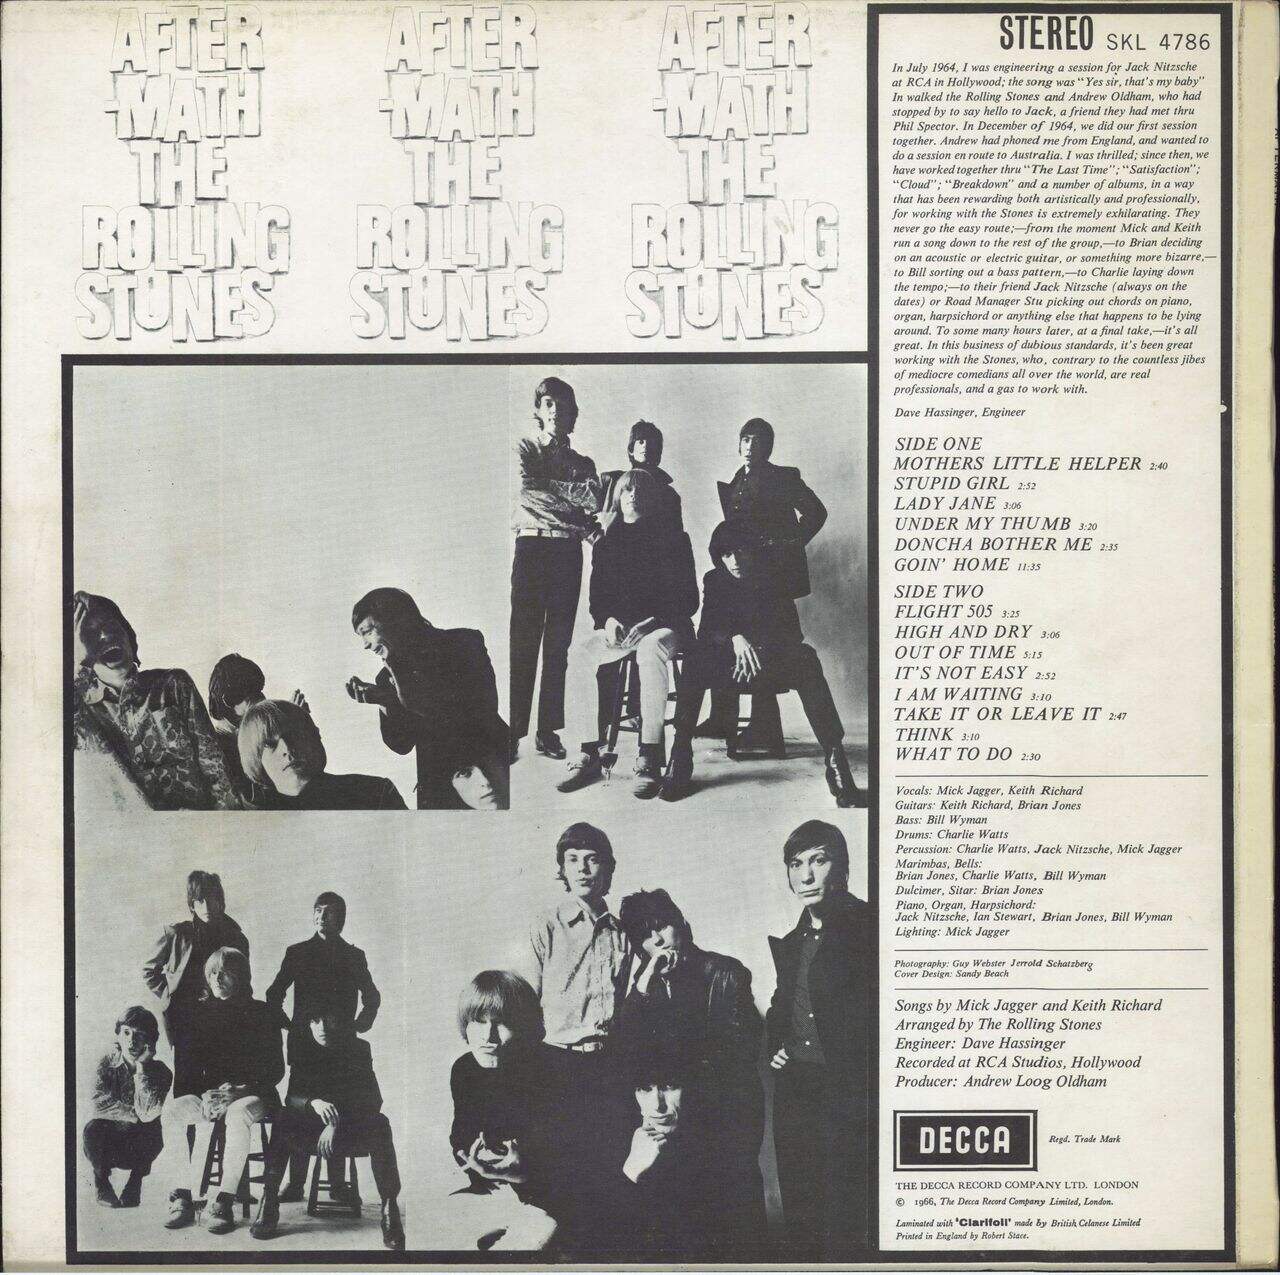 The Rolling Stones Aftermath - 2nd UK Vinyl LP